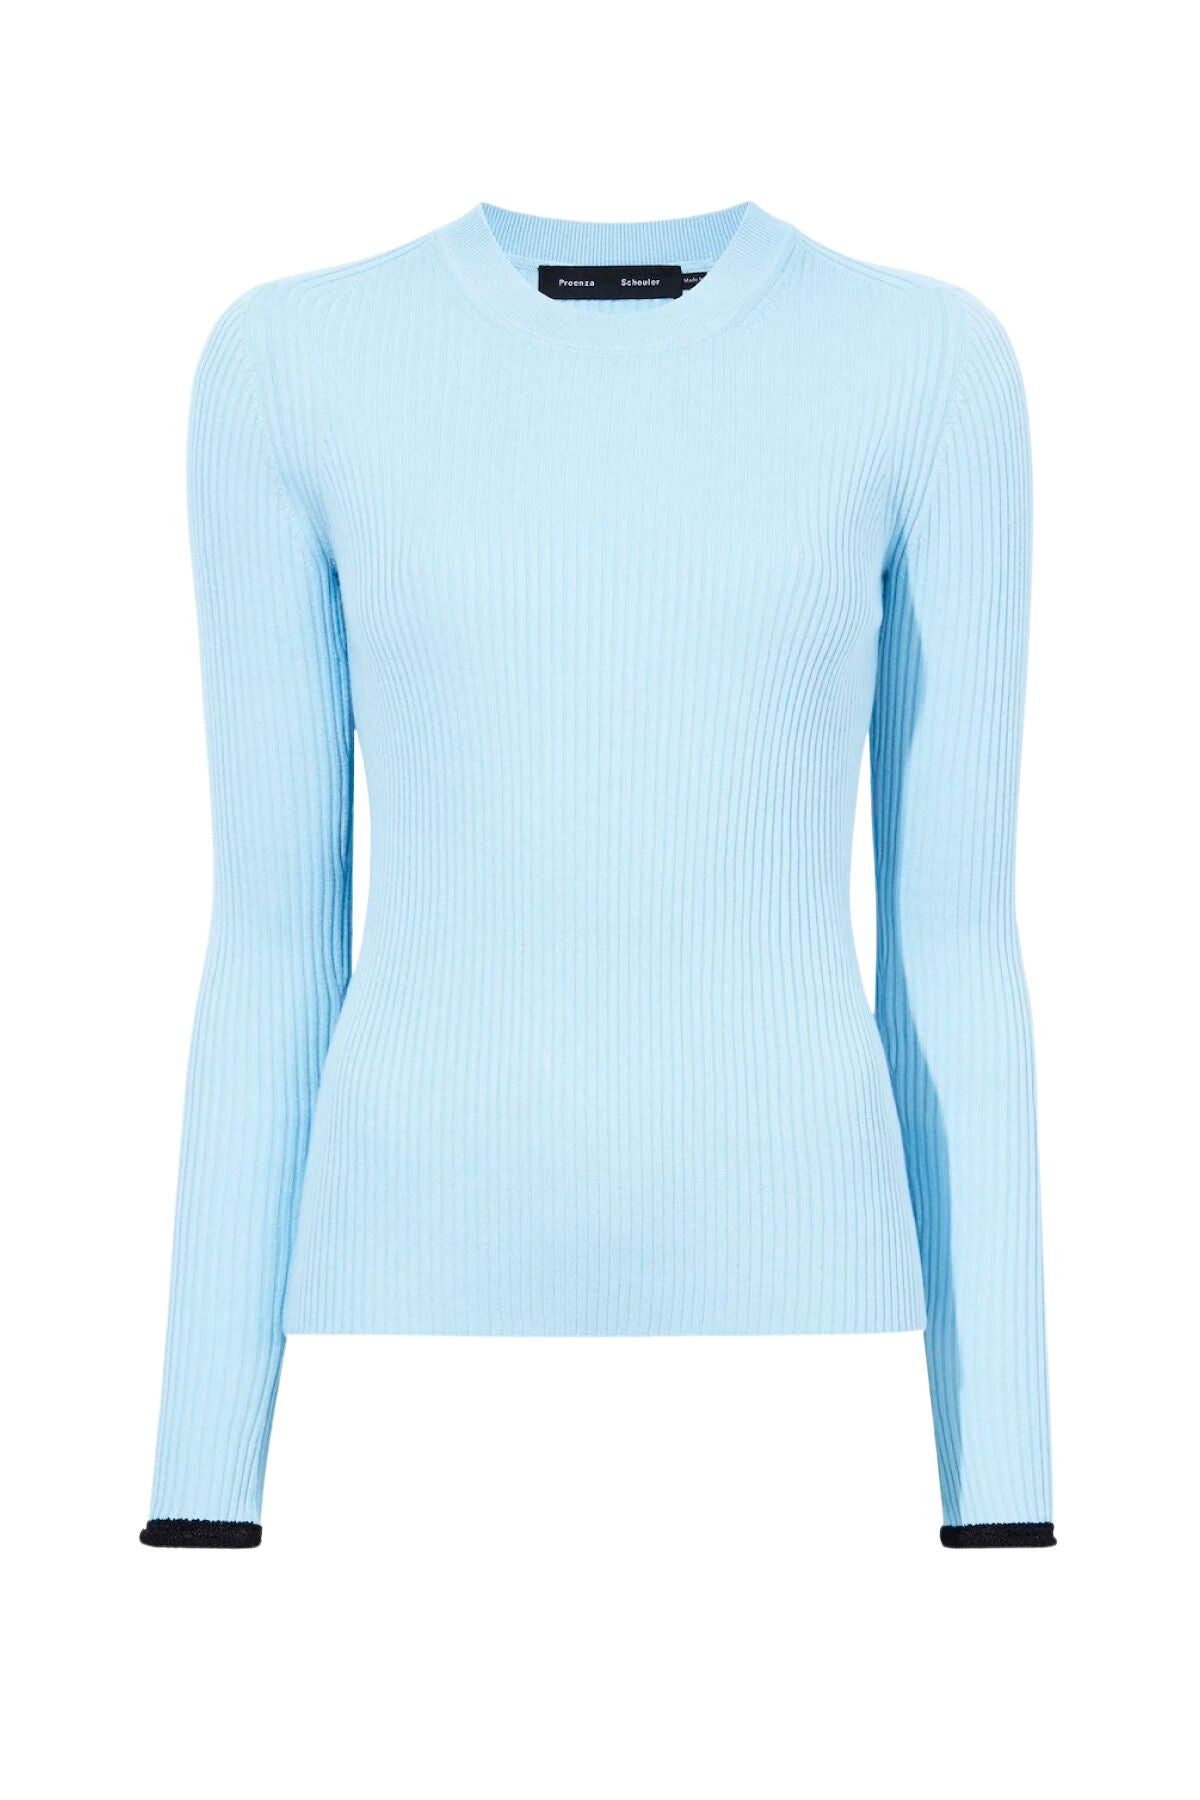 Proenza Schouler Silk Cashmere Sweater - Light Blue